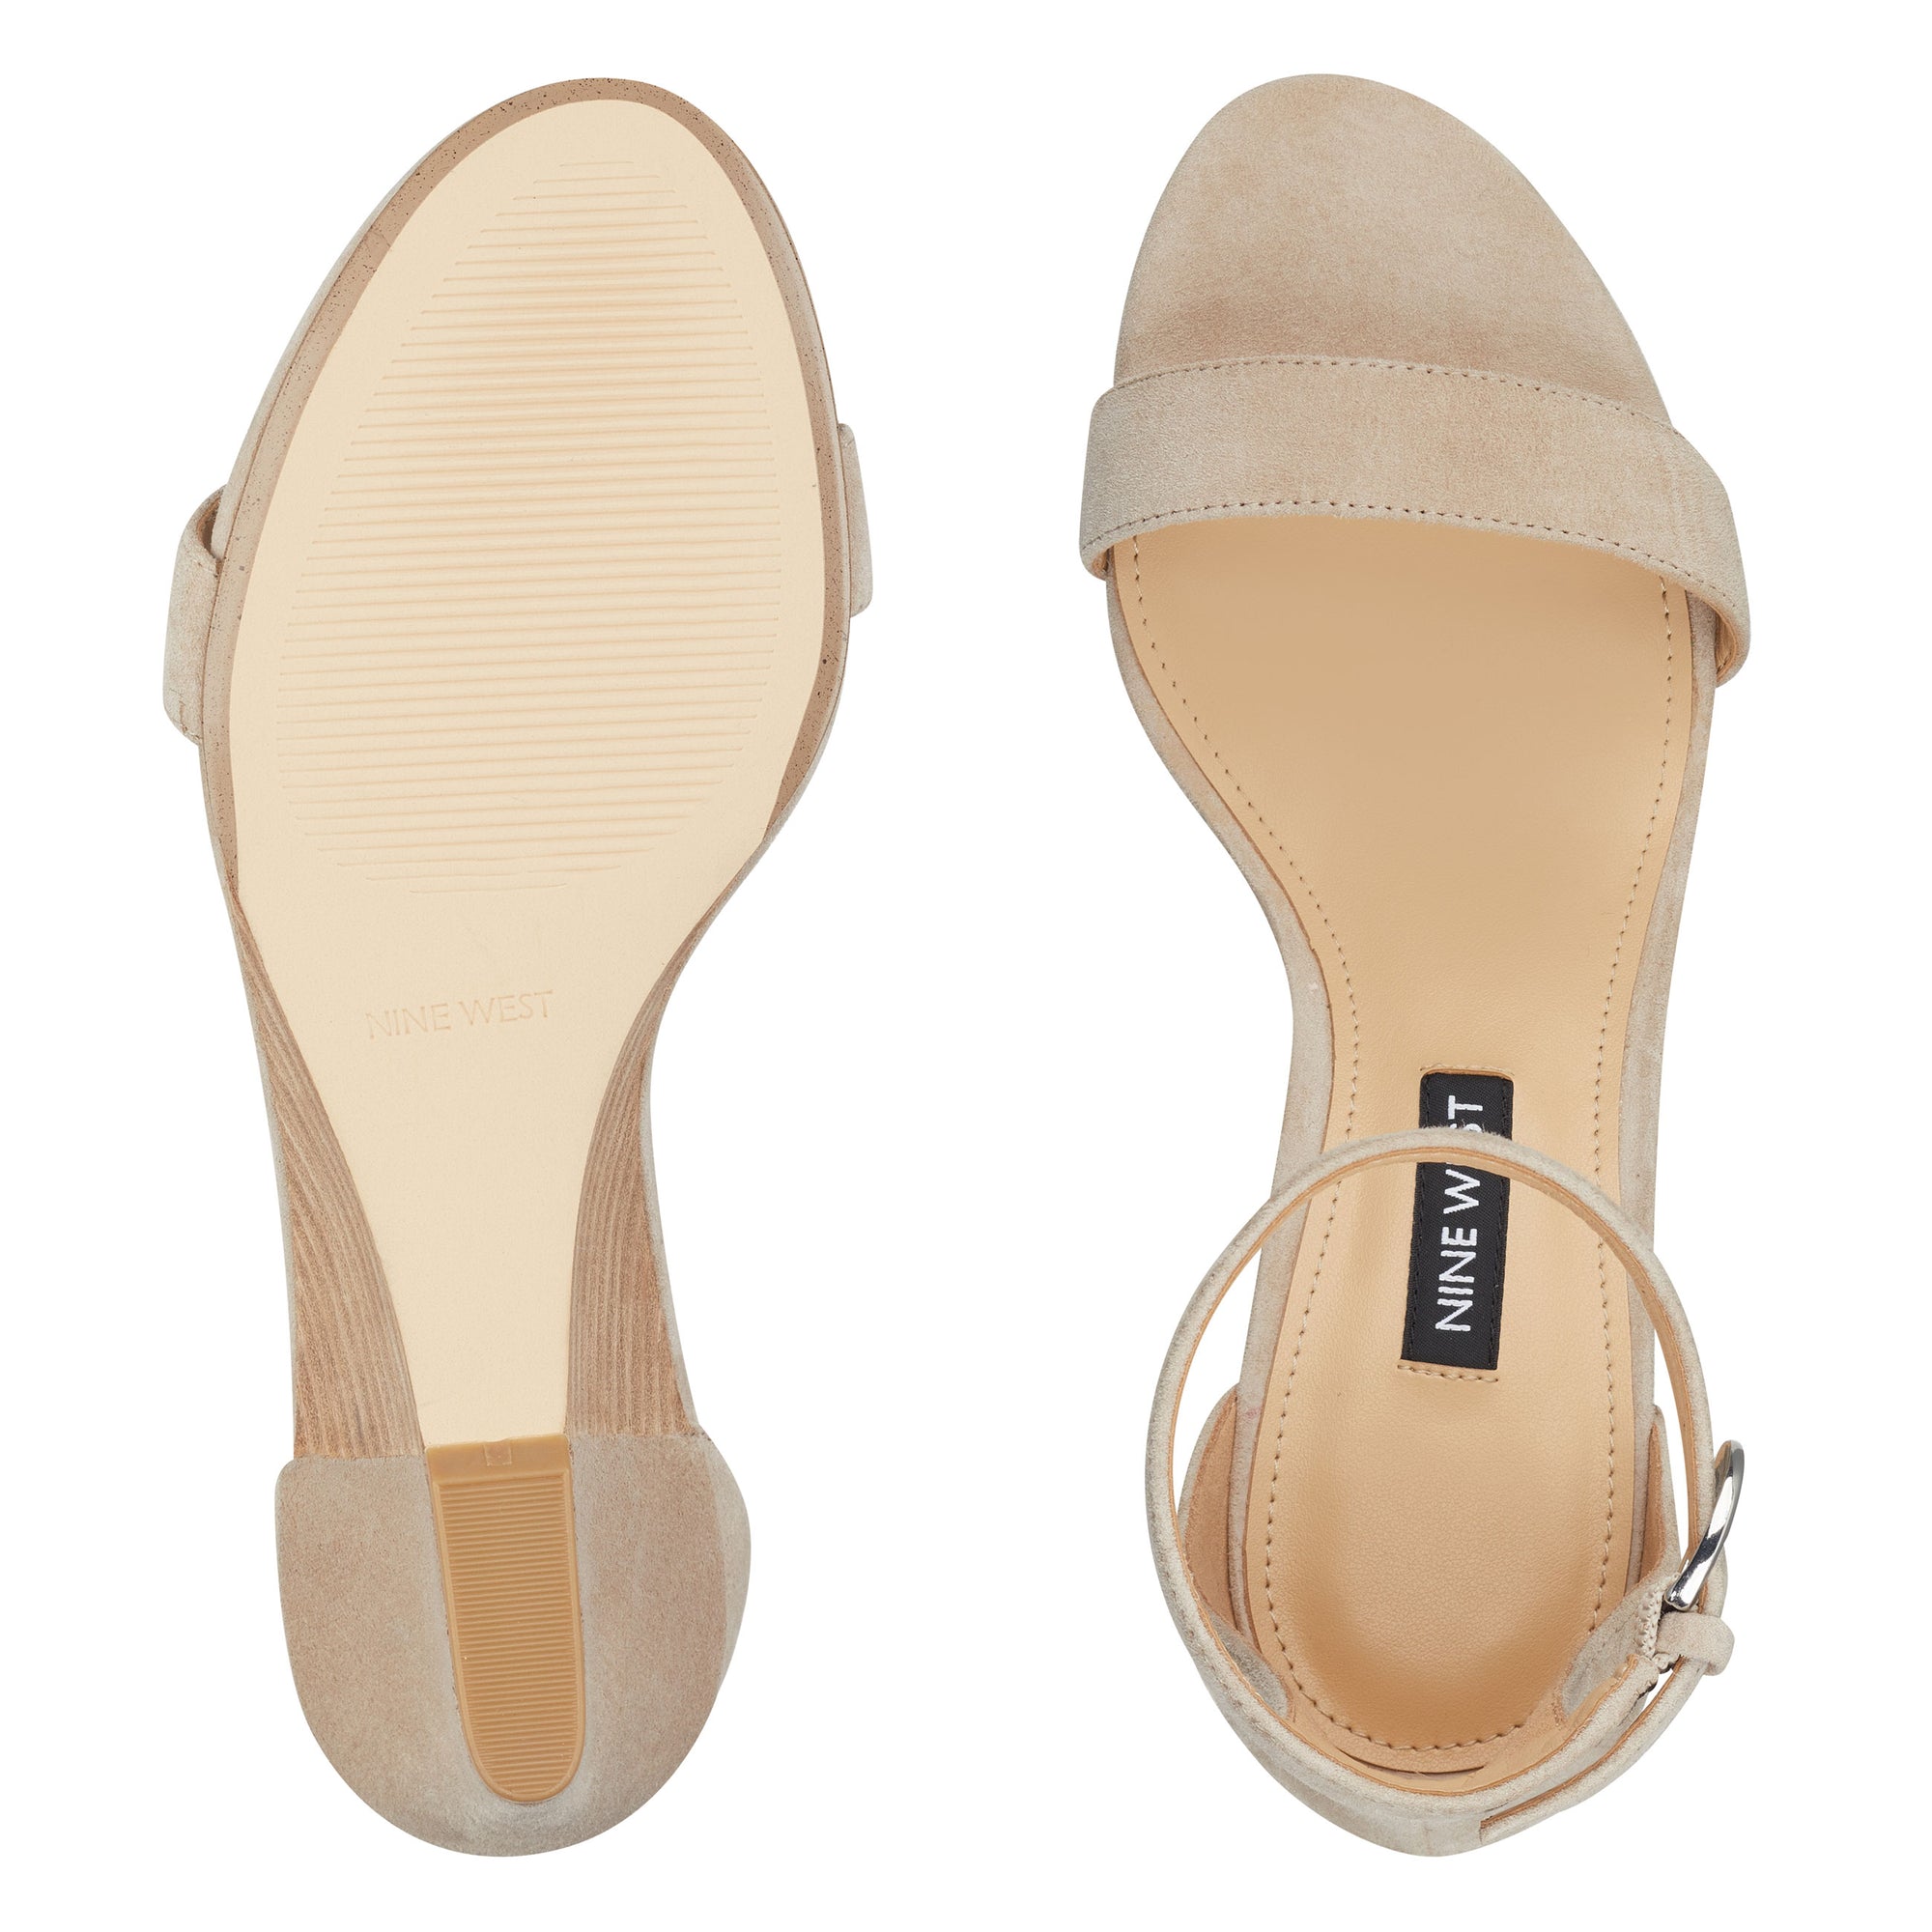 Sloane Wedge Sandals - Nine West